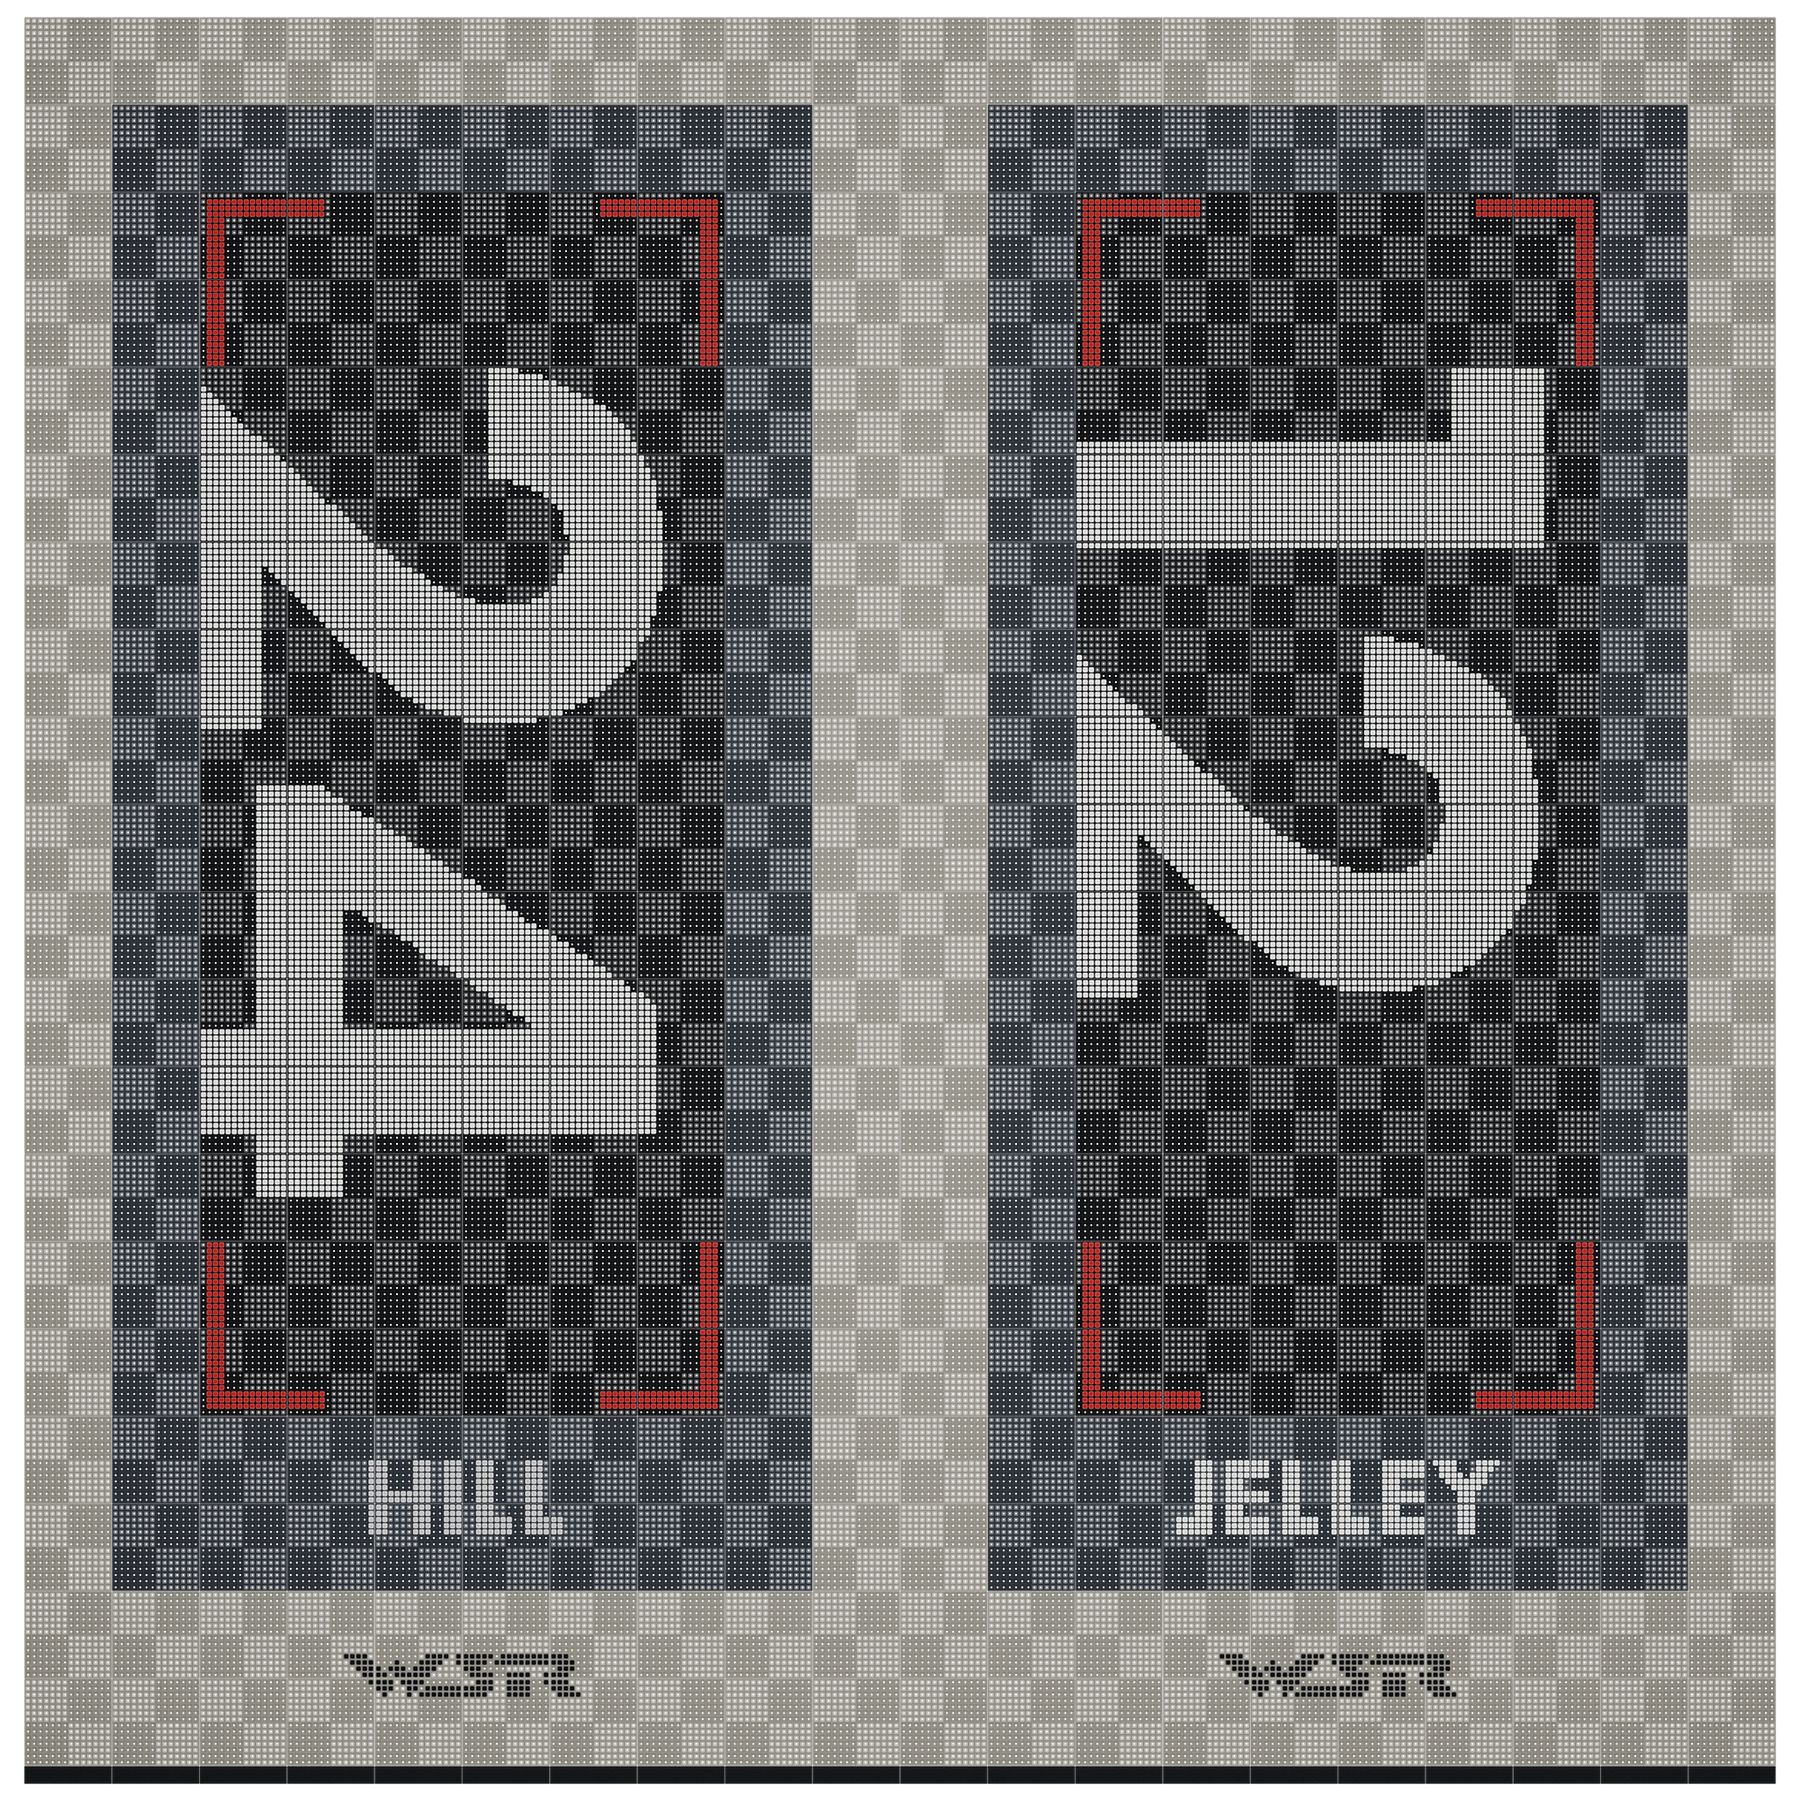 West Surrey Racing - Jake Hill and Stephen Jelley - Double Garage Floor Pack Garage Flooring Pack Versoflor   